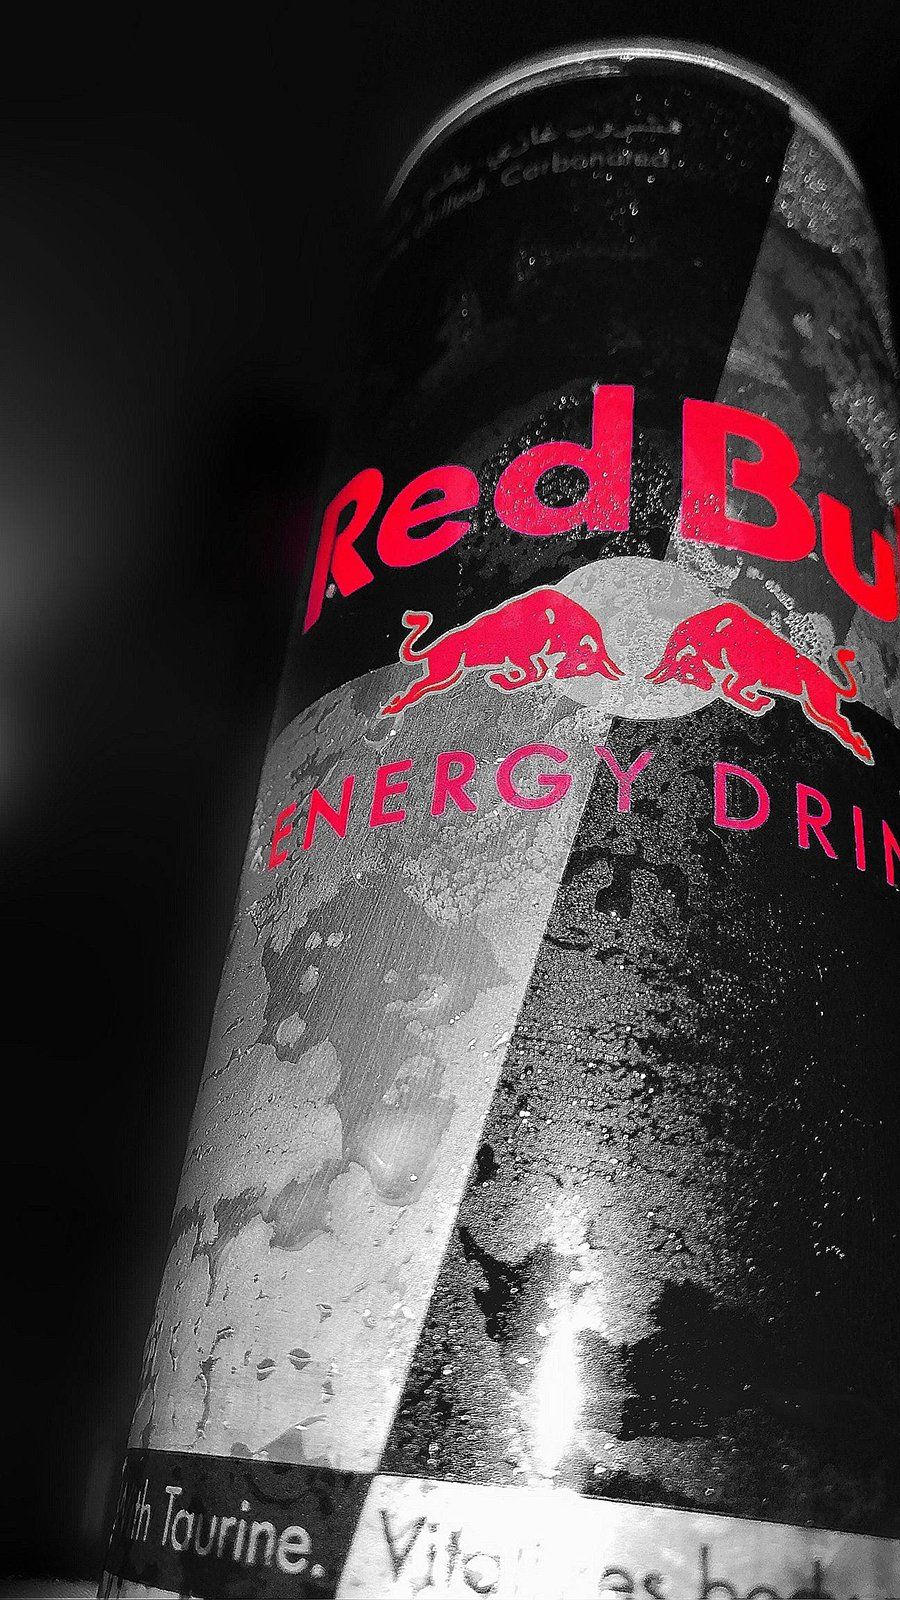  Red Bull Hintergrundbild 900x1600. Red bull Wallpaper Download